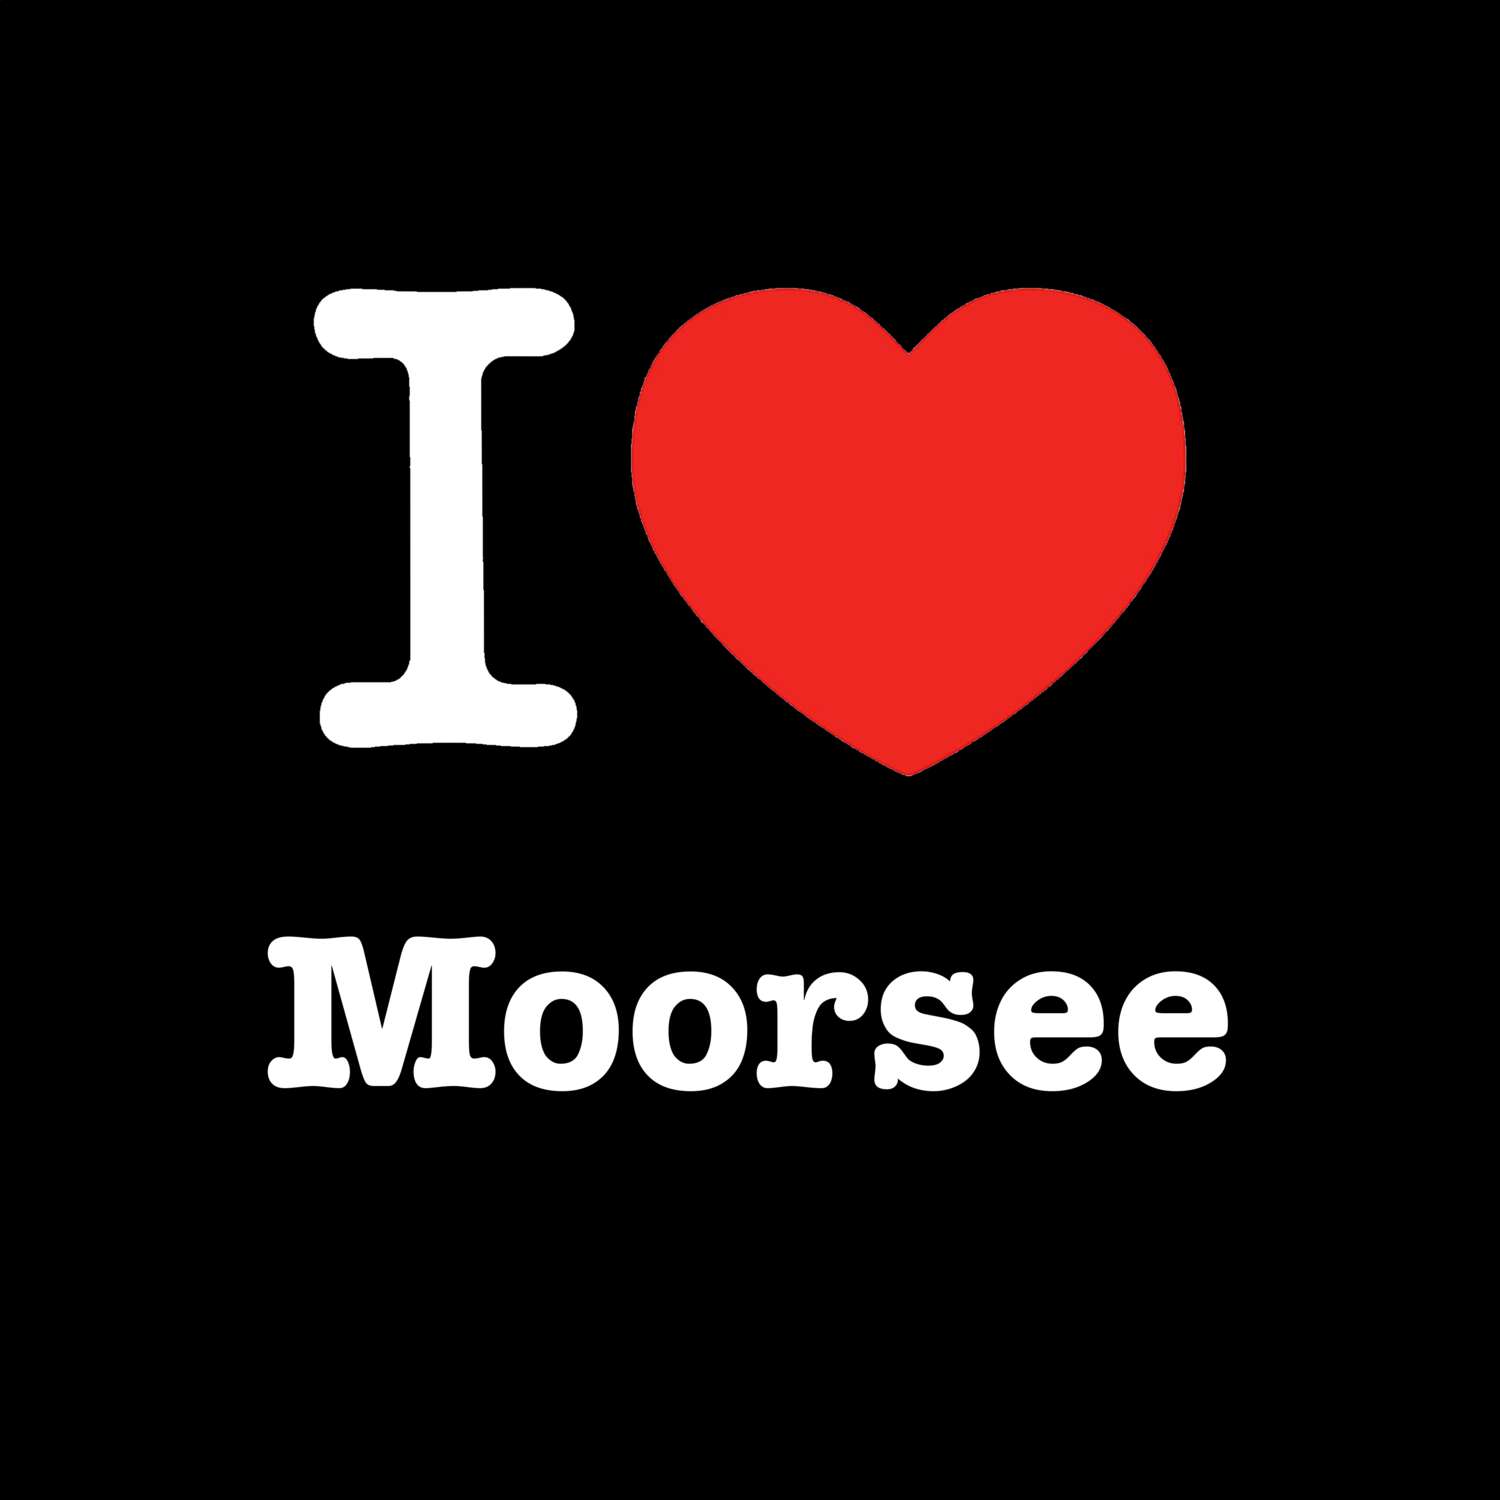 Moorsee T-Shirt »I love«